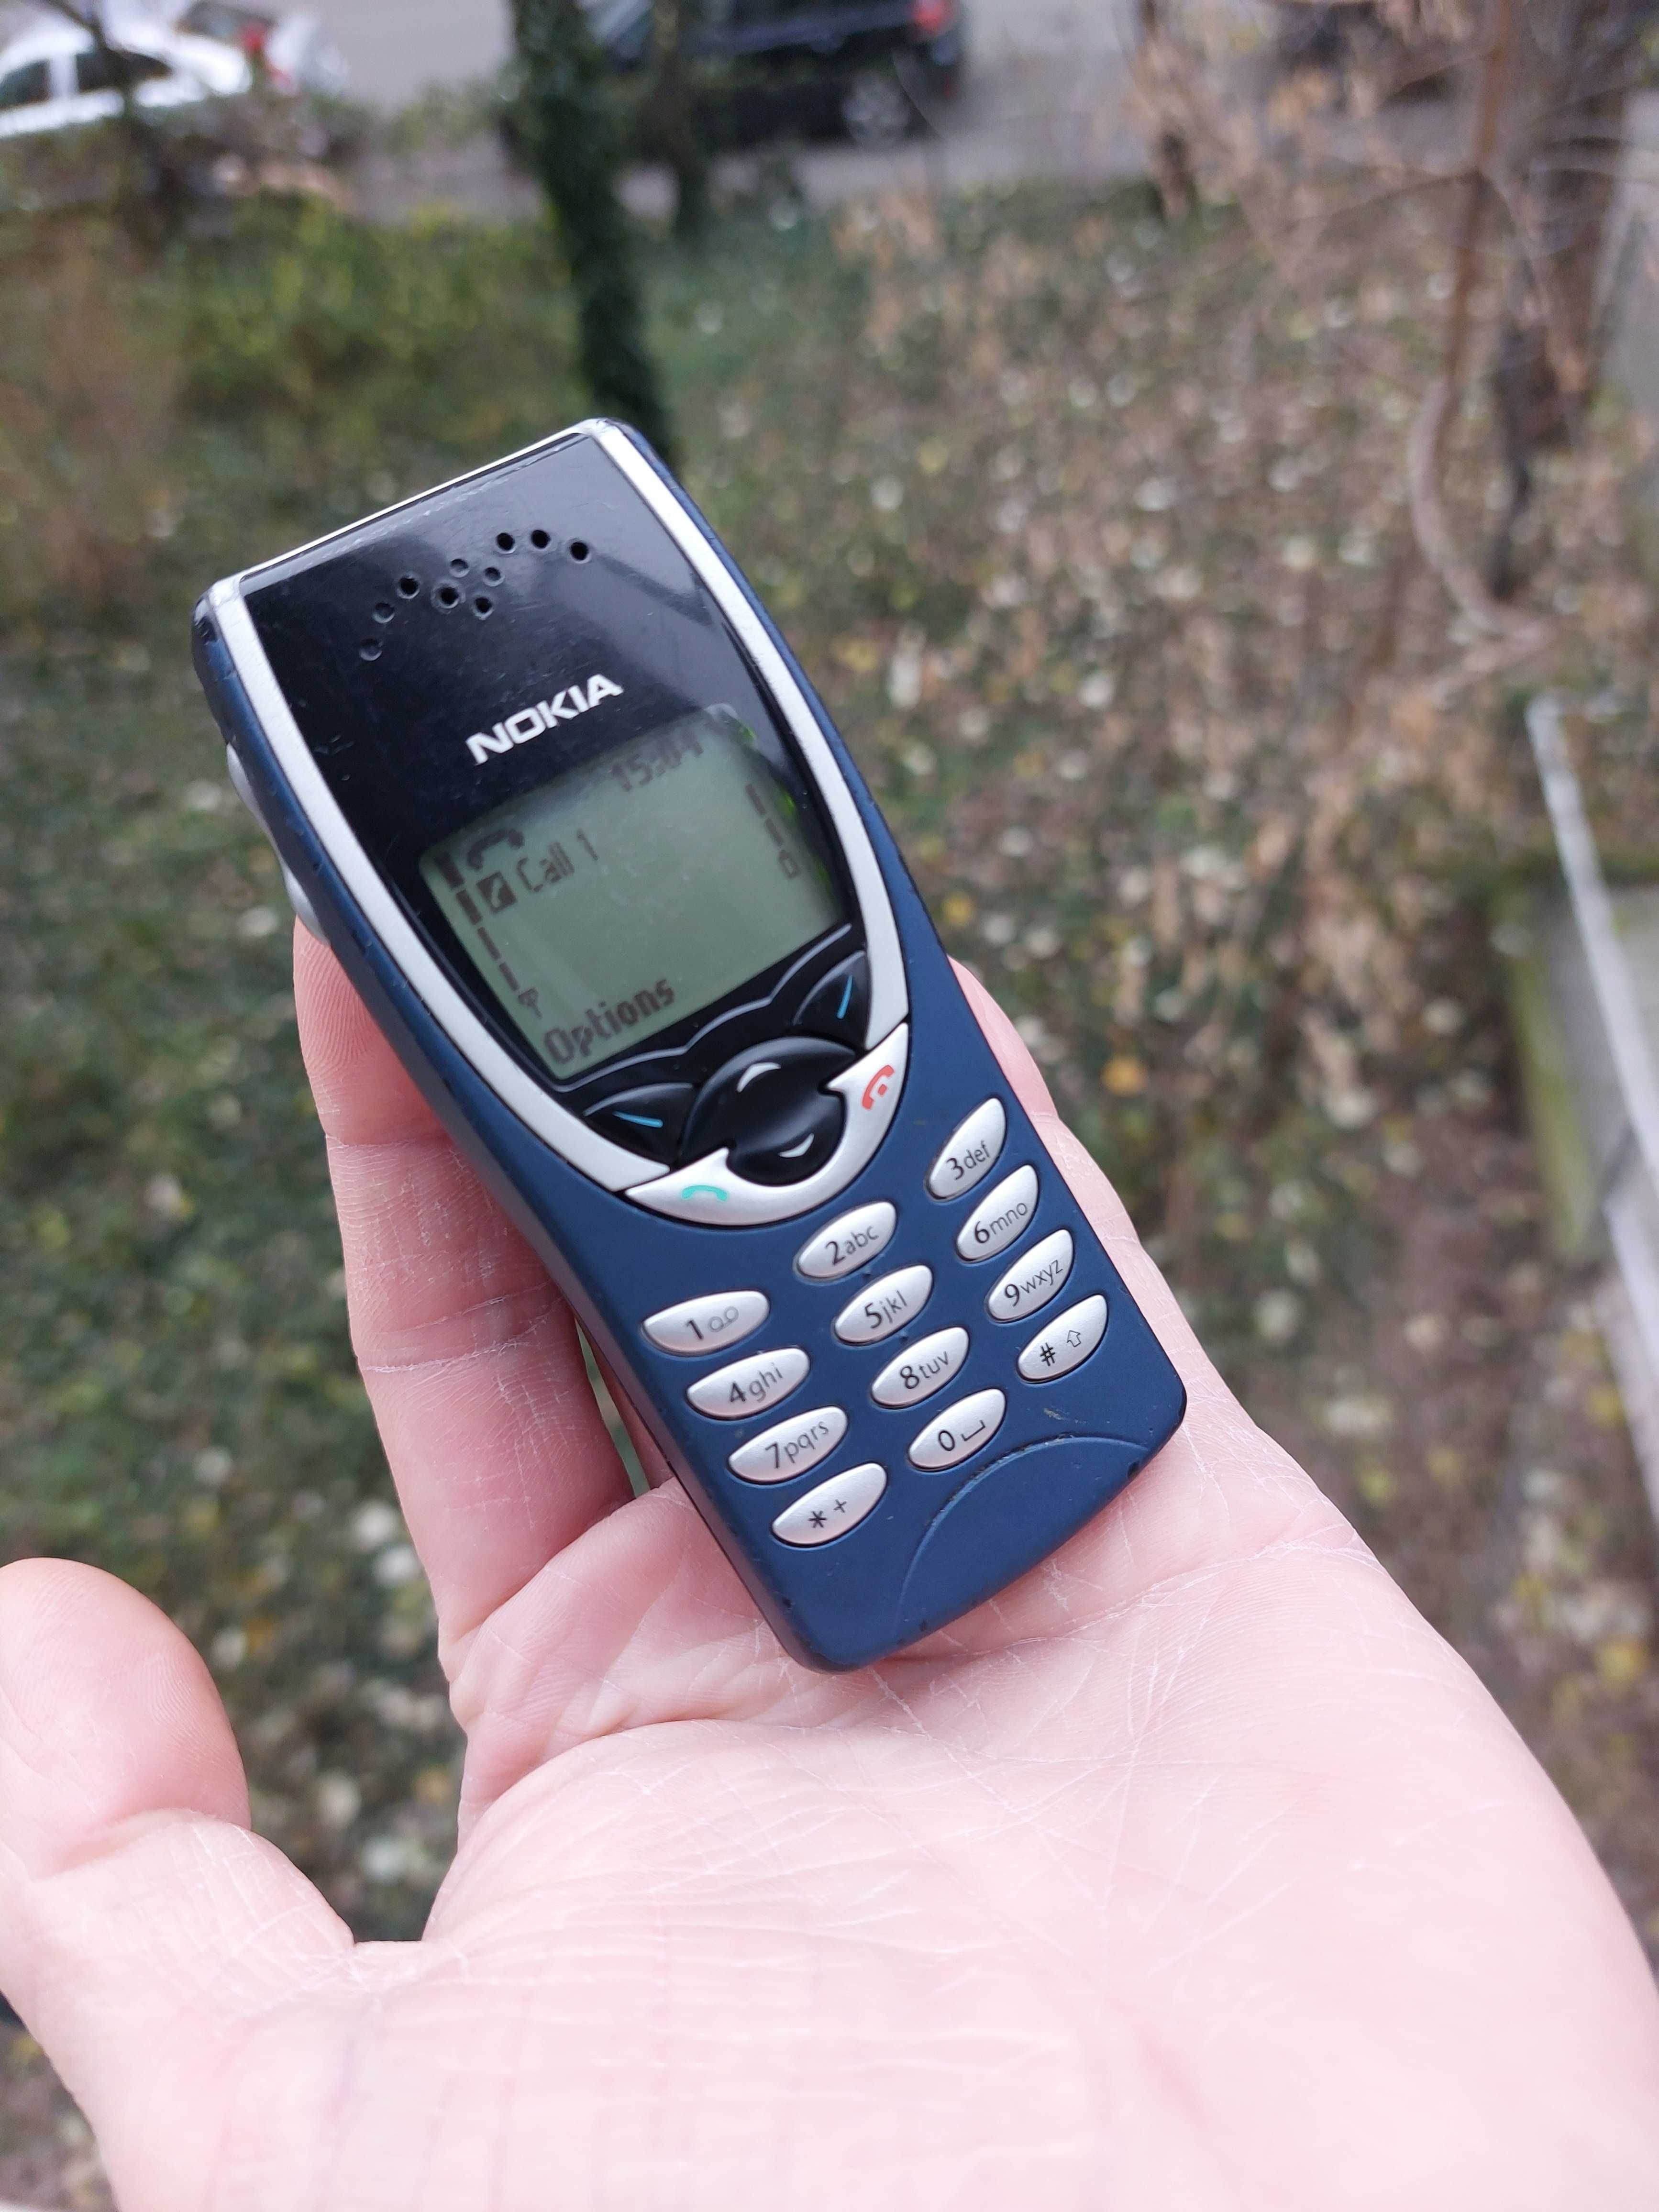 Nokia 8210 orig Finlanda decodat stare f buna functionare ireprosabila